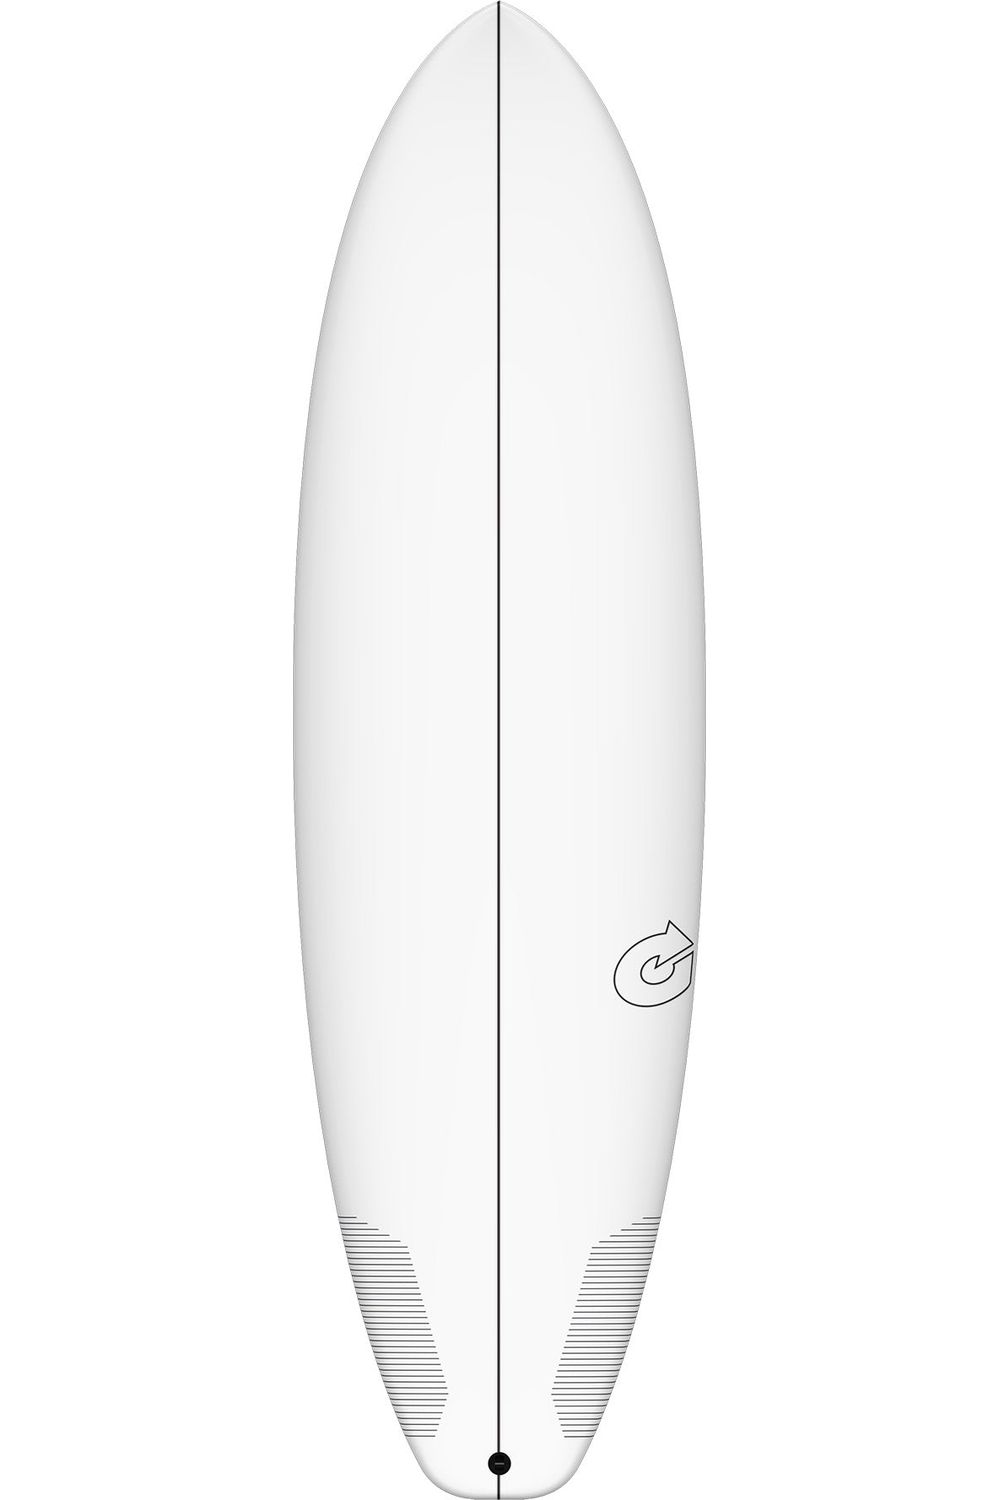 Torq TEC BigBoy23 Surfboard in White